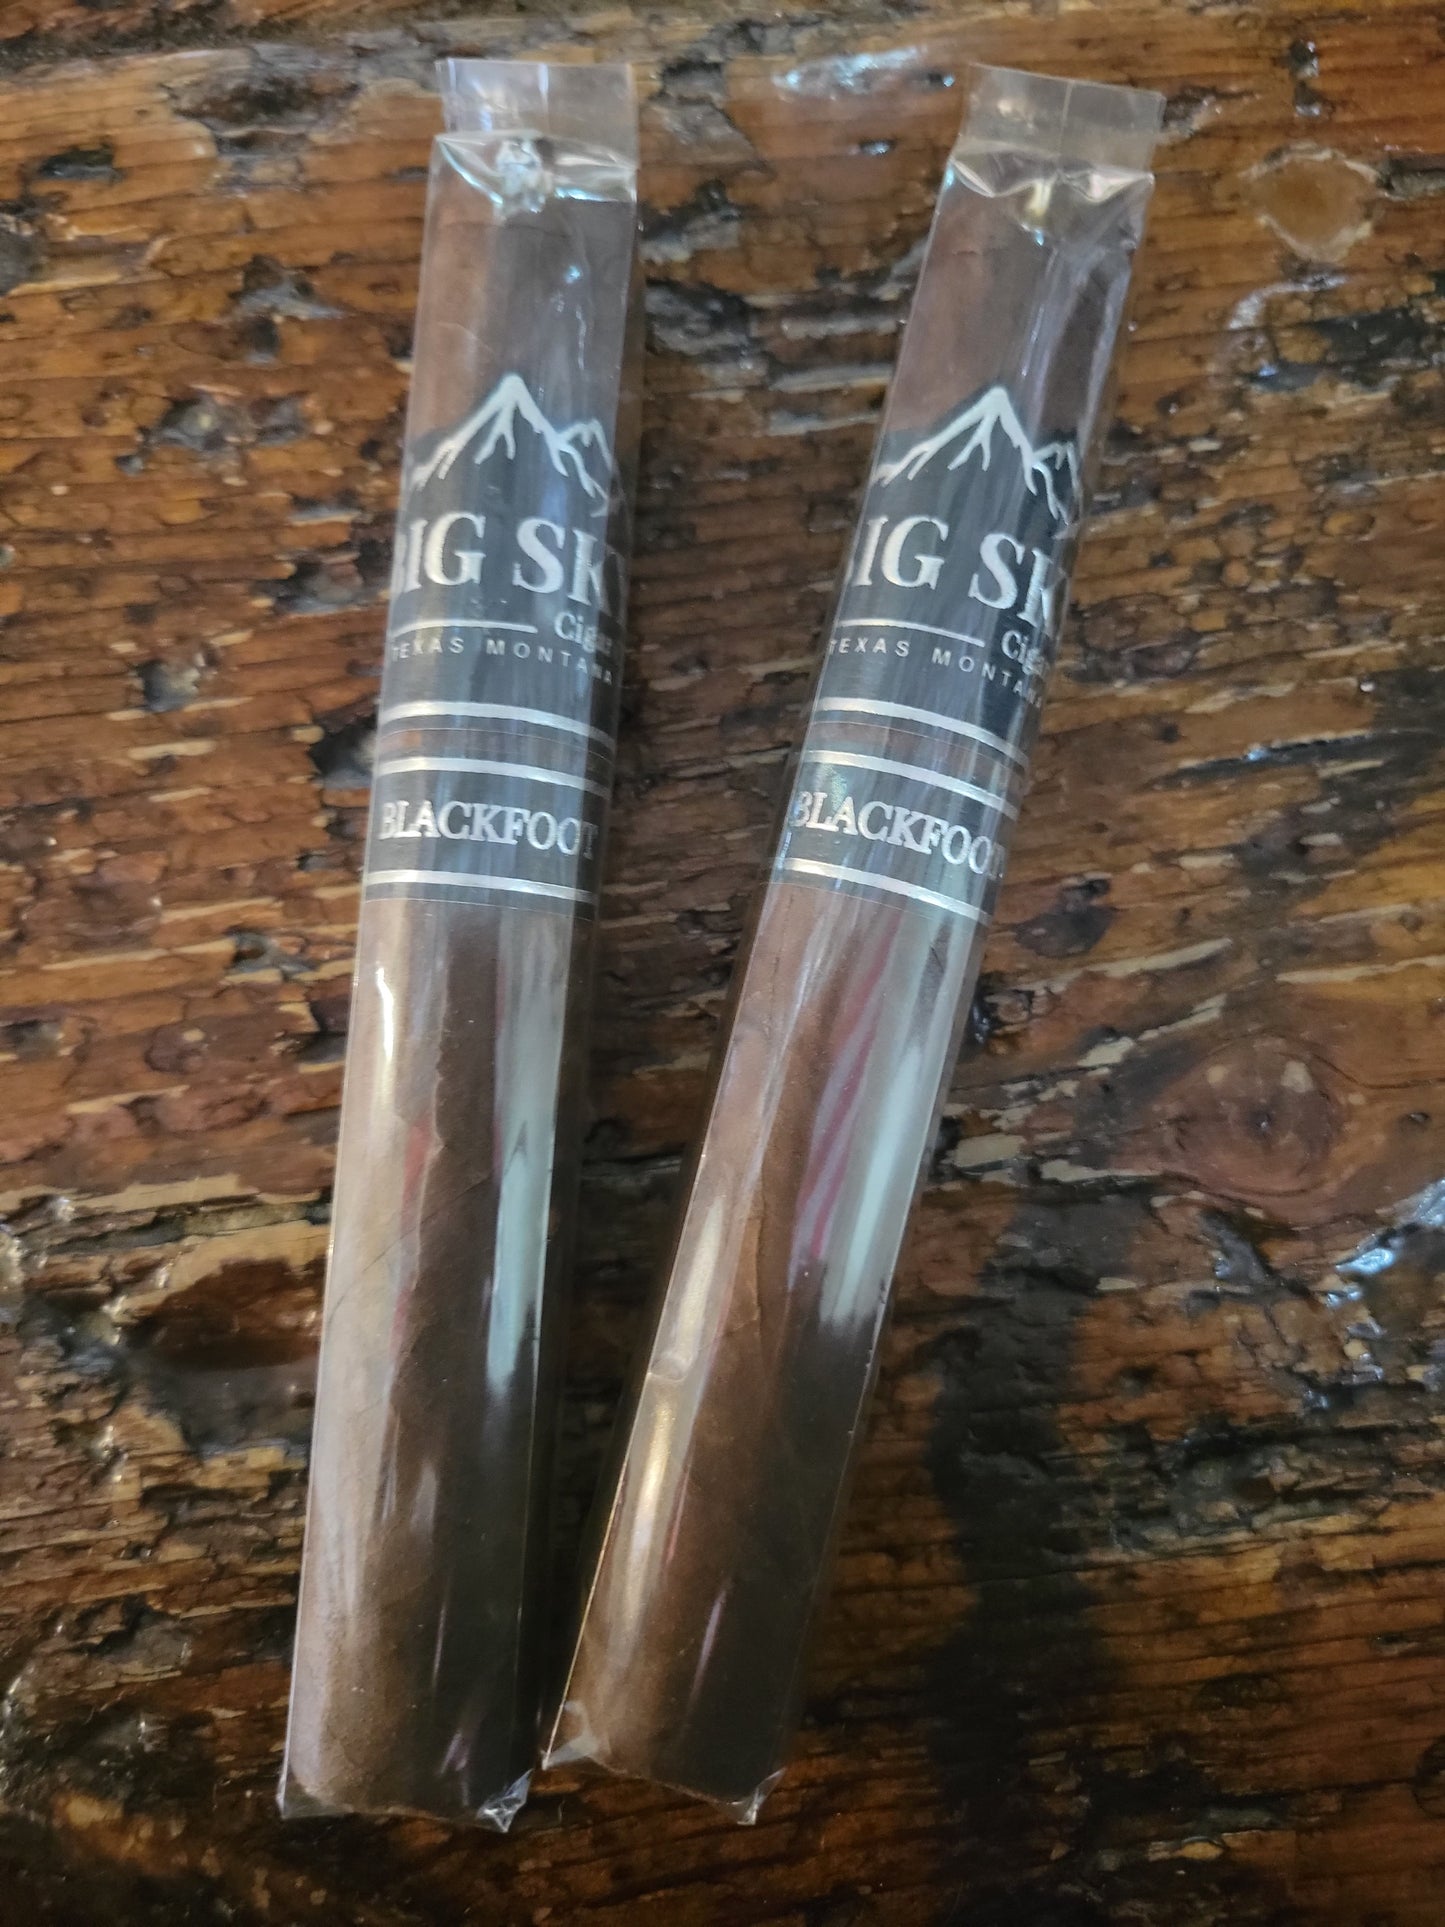 Big Sky Cigars